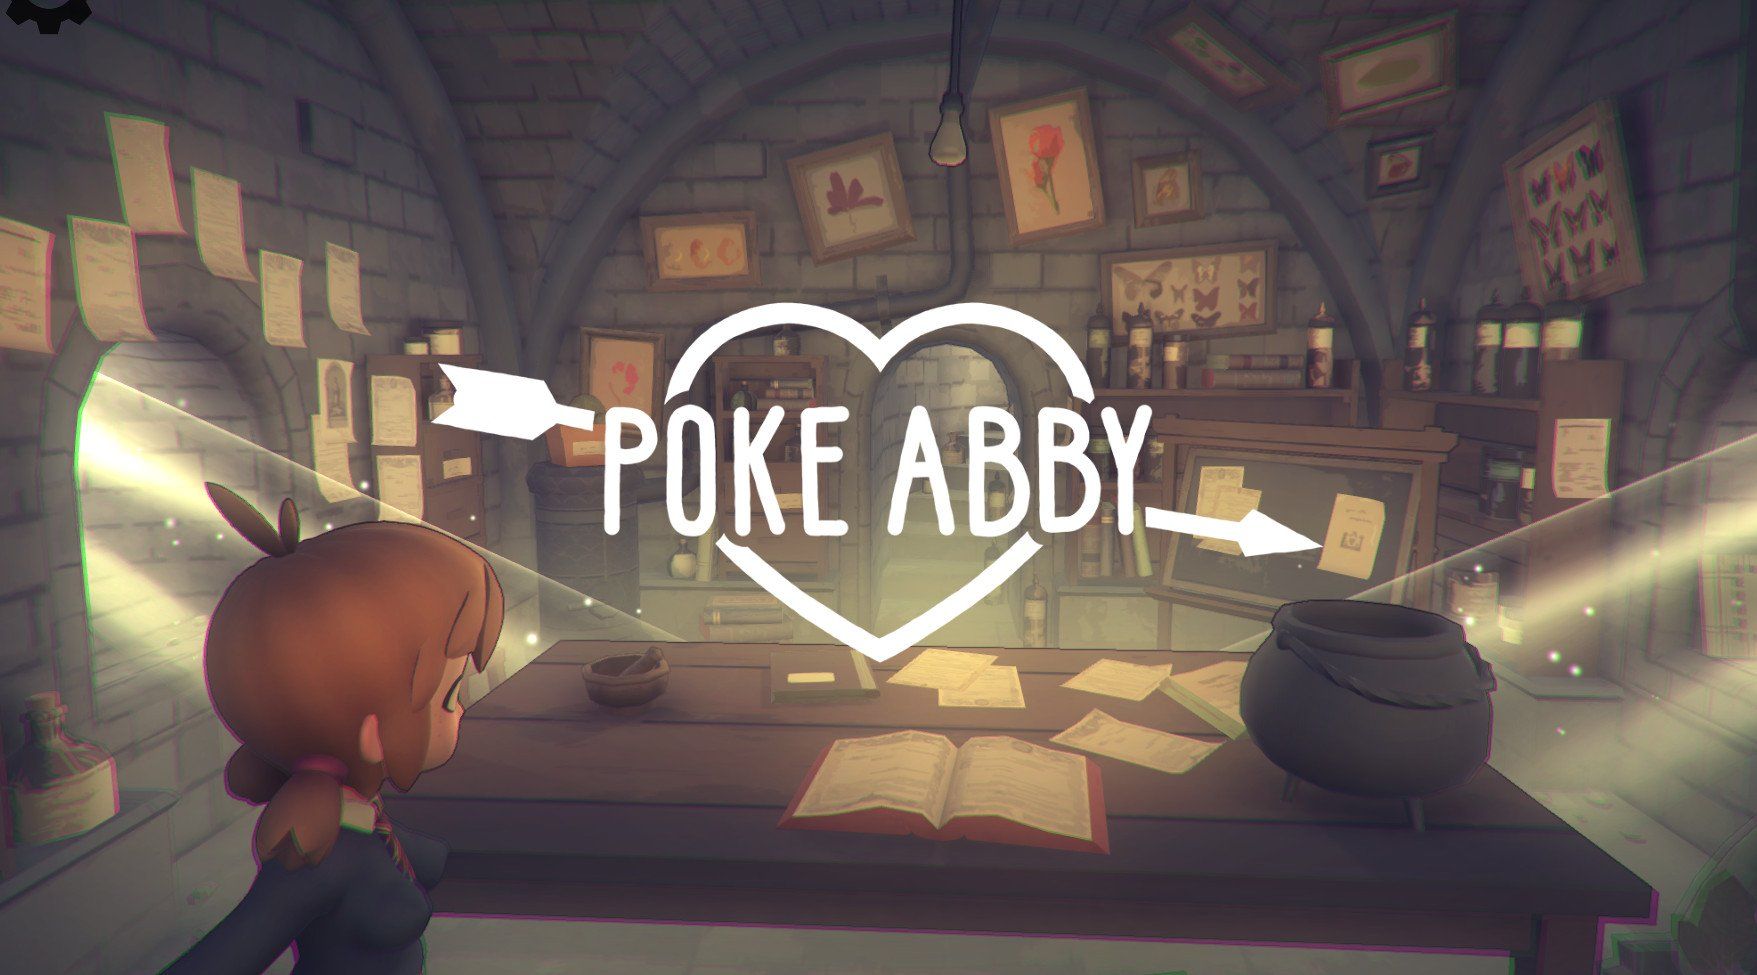 Poke abby gameplay full game